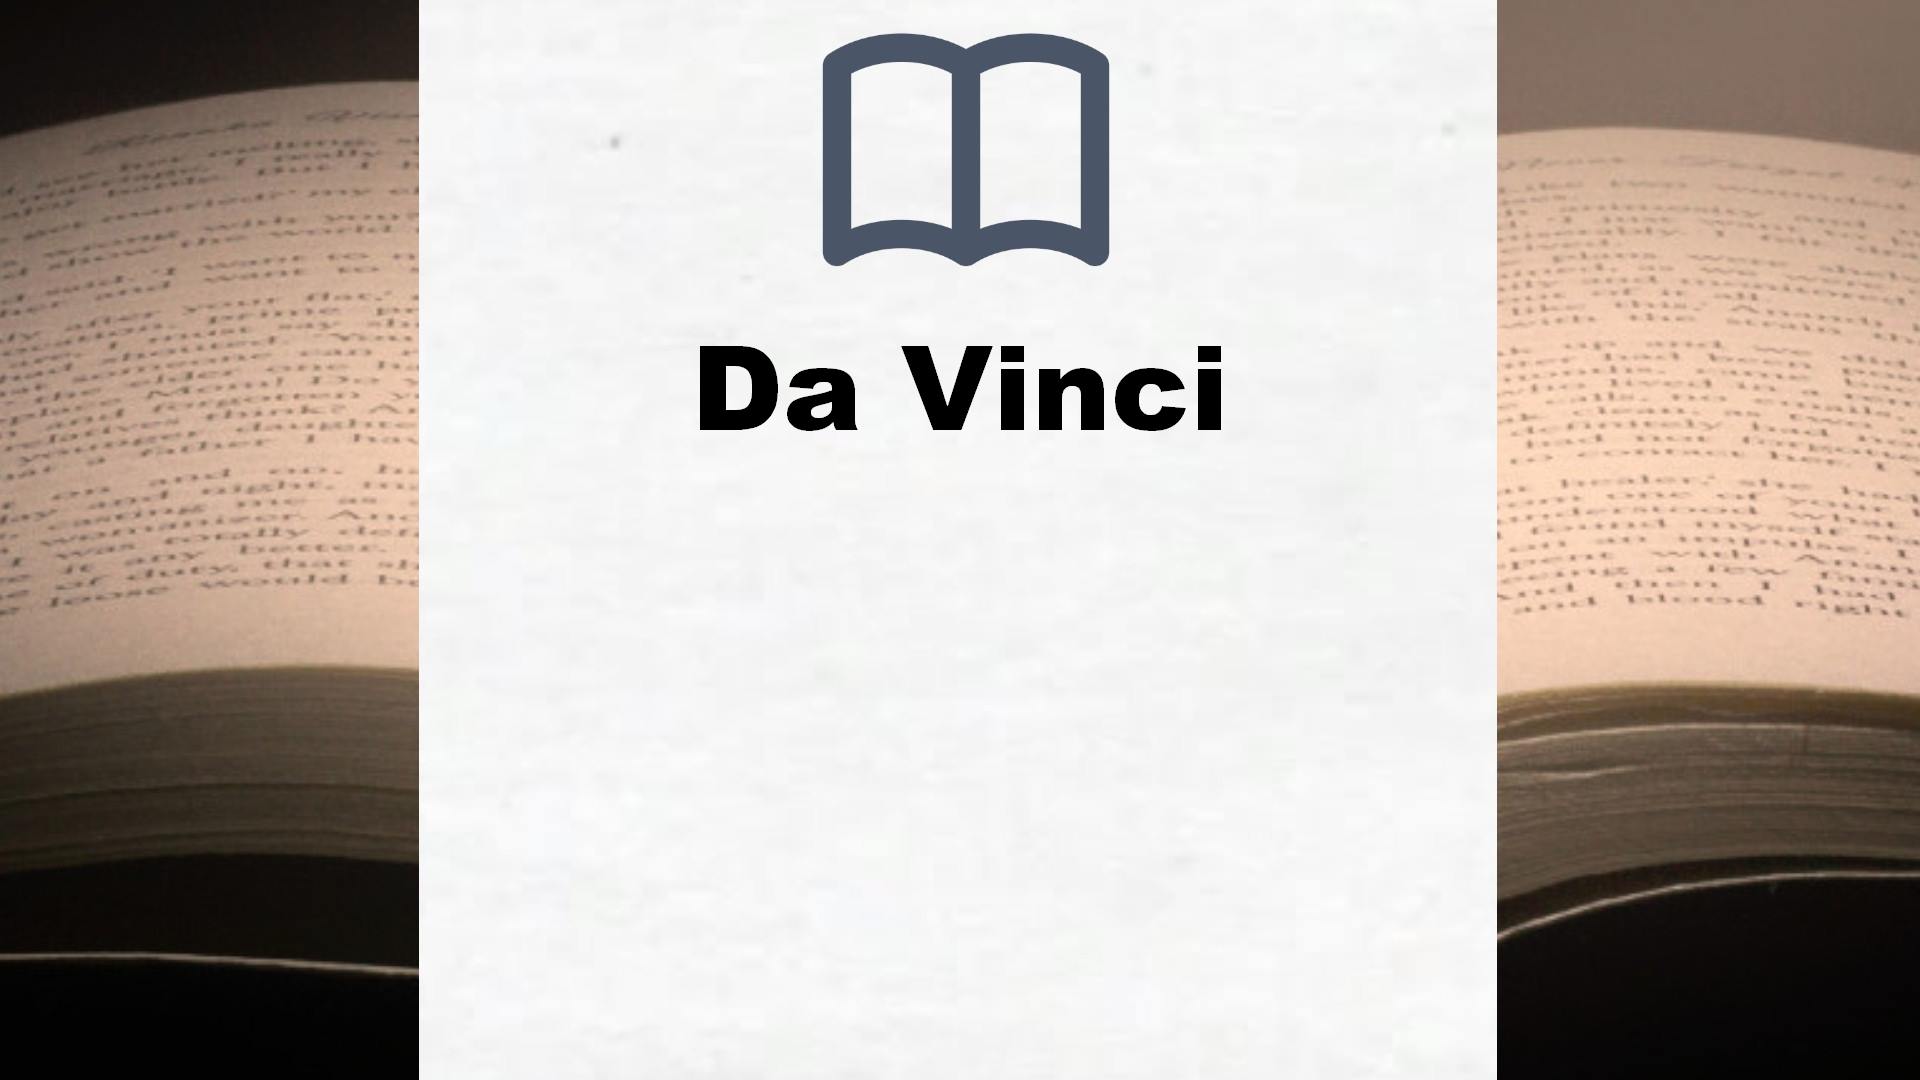 Bücher über Da Vinci